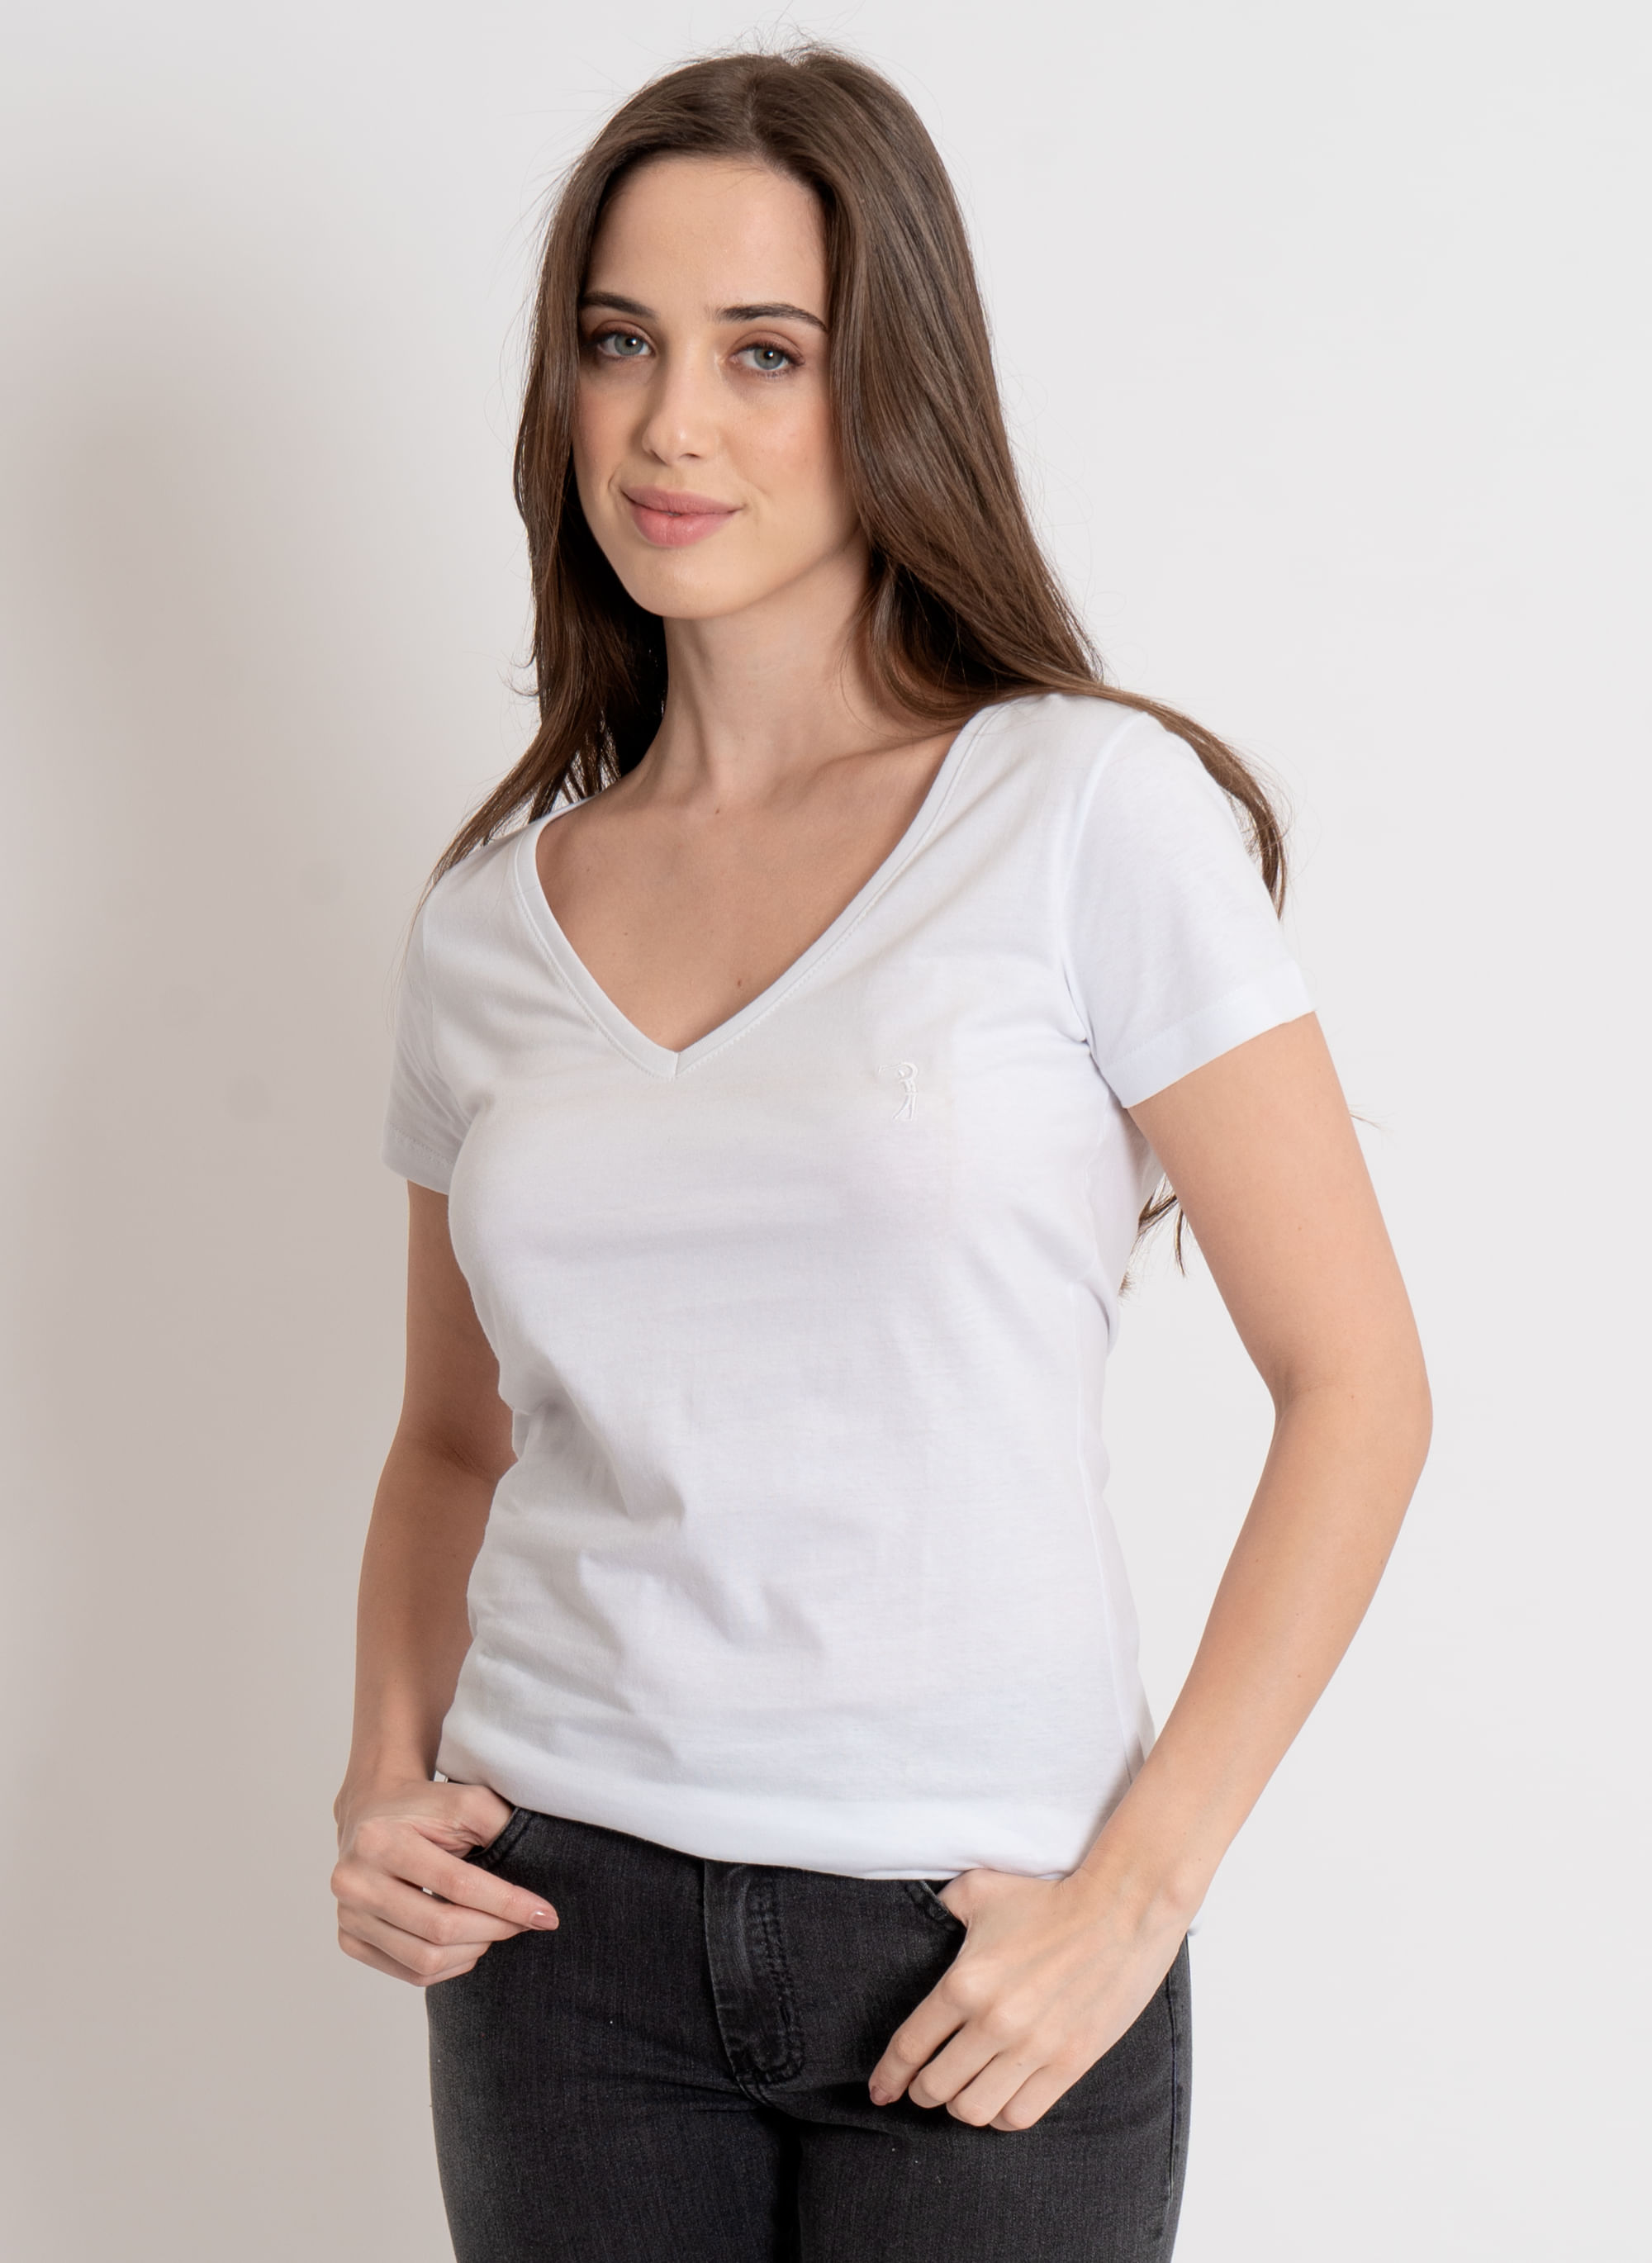 Camiseta-Aleatory-Feminina-Live-Branca-Branco-G